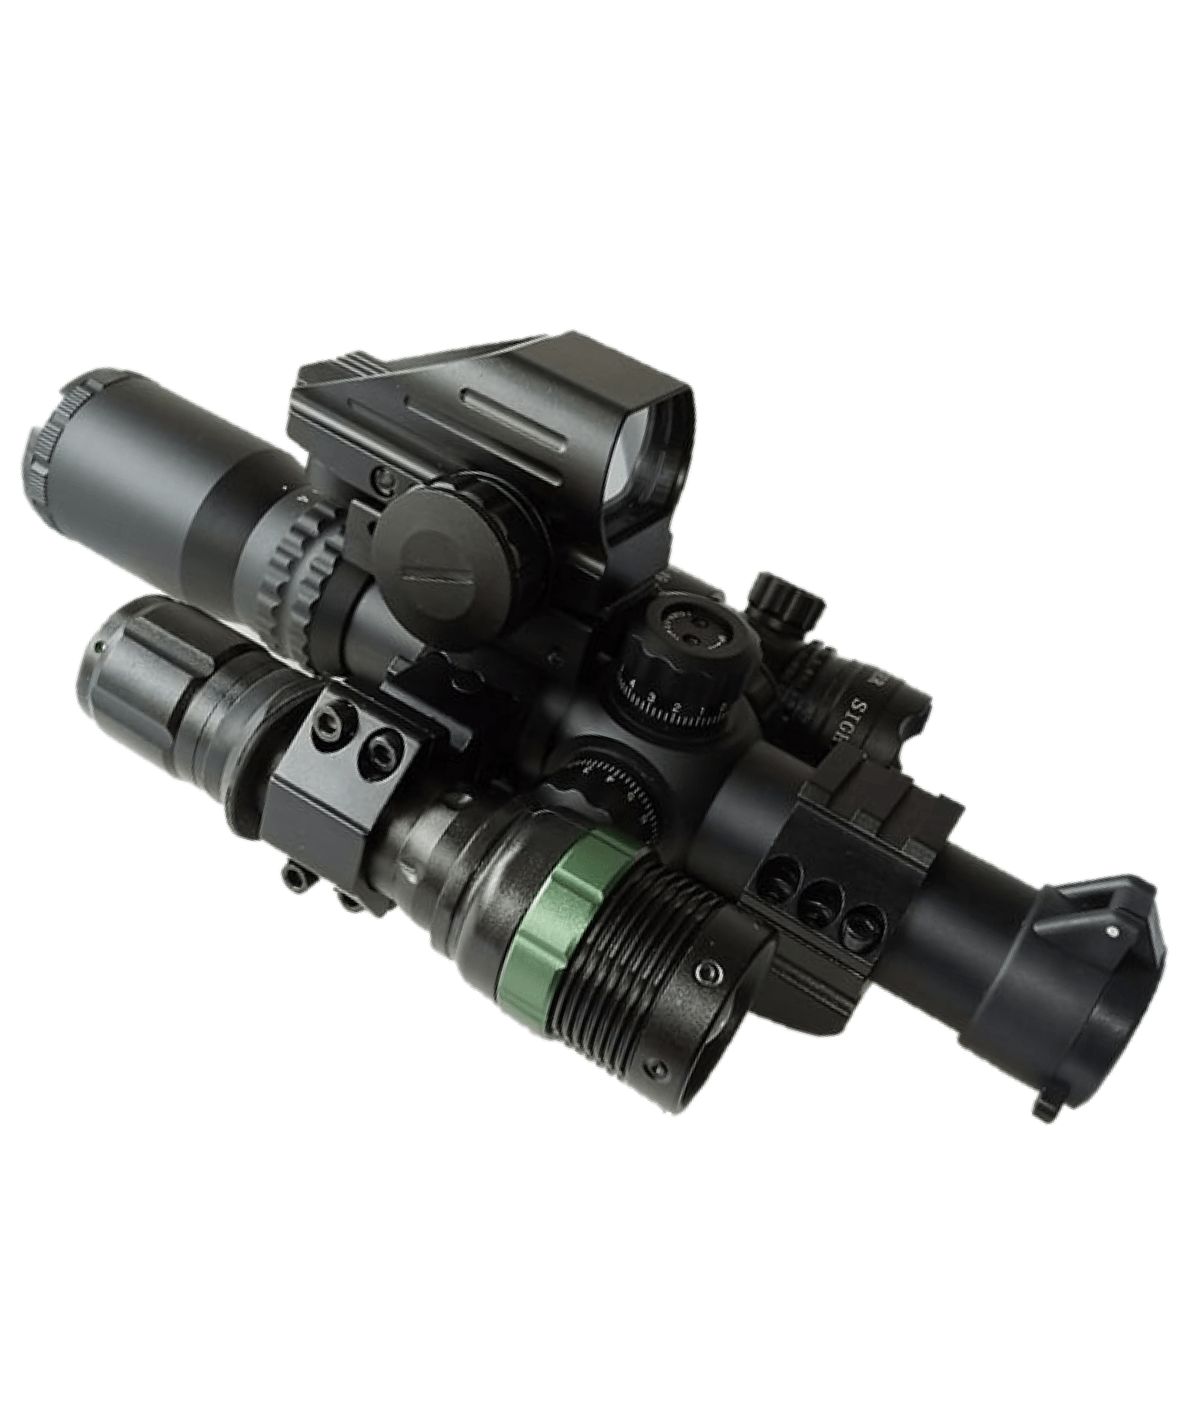 Hardcore Aim-O 1-4x24SE Combo 5 in 1 Rifle scope fitzztyl co. 